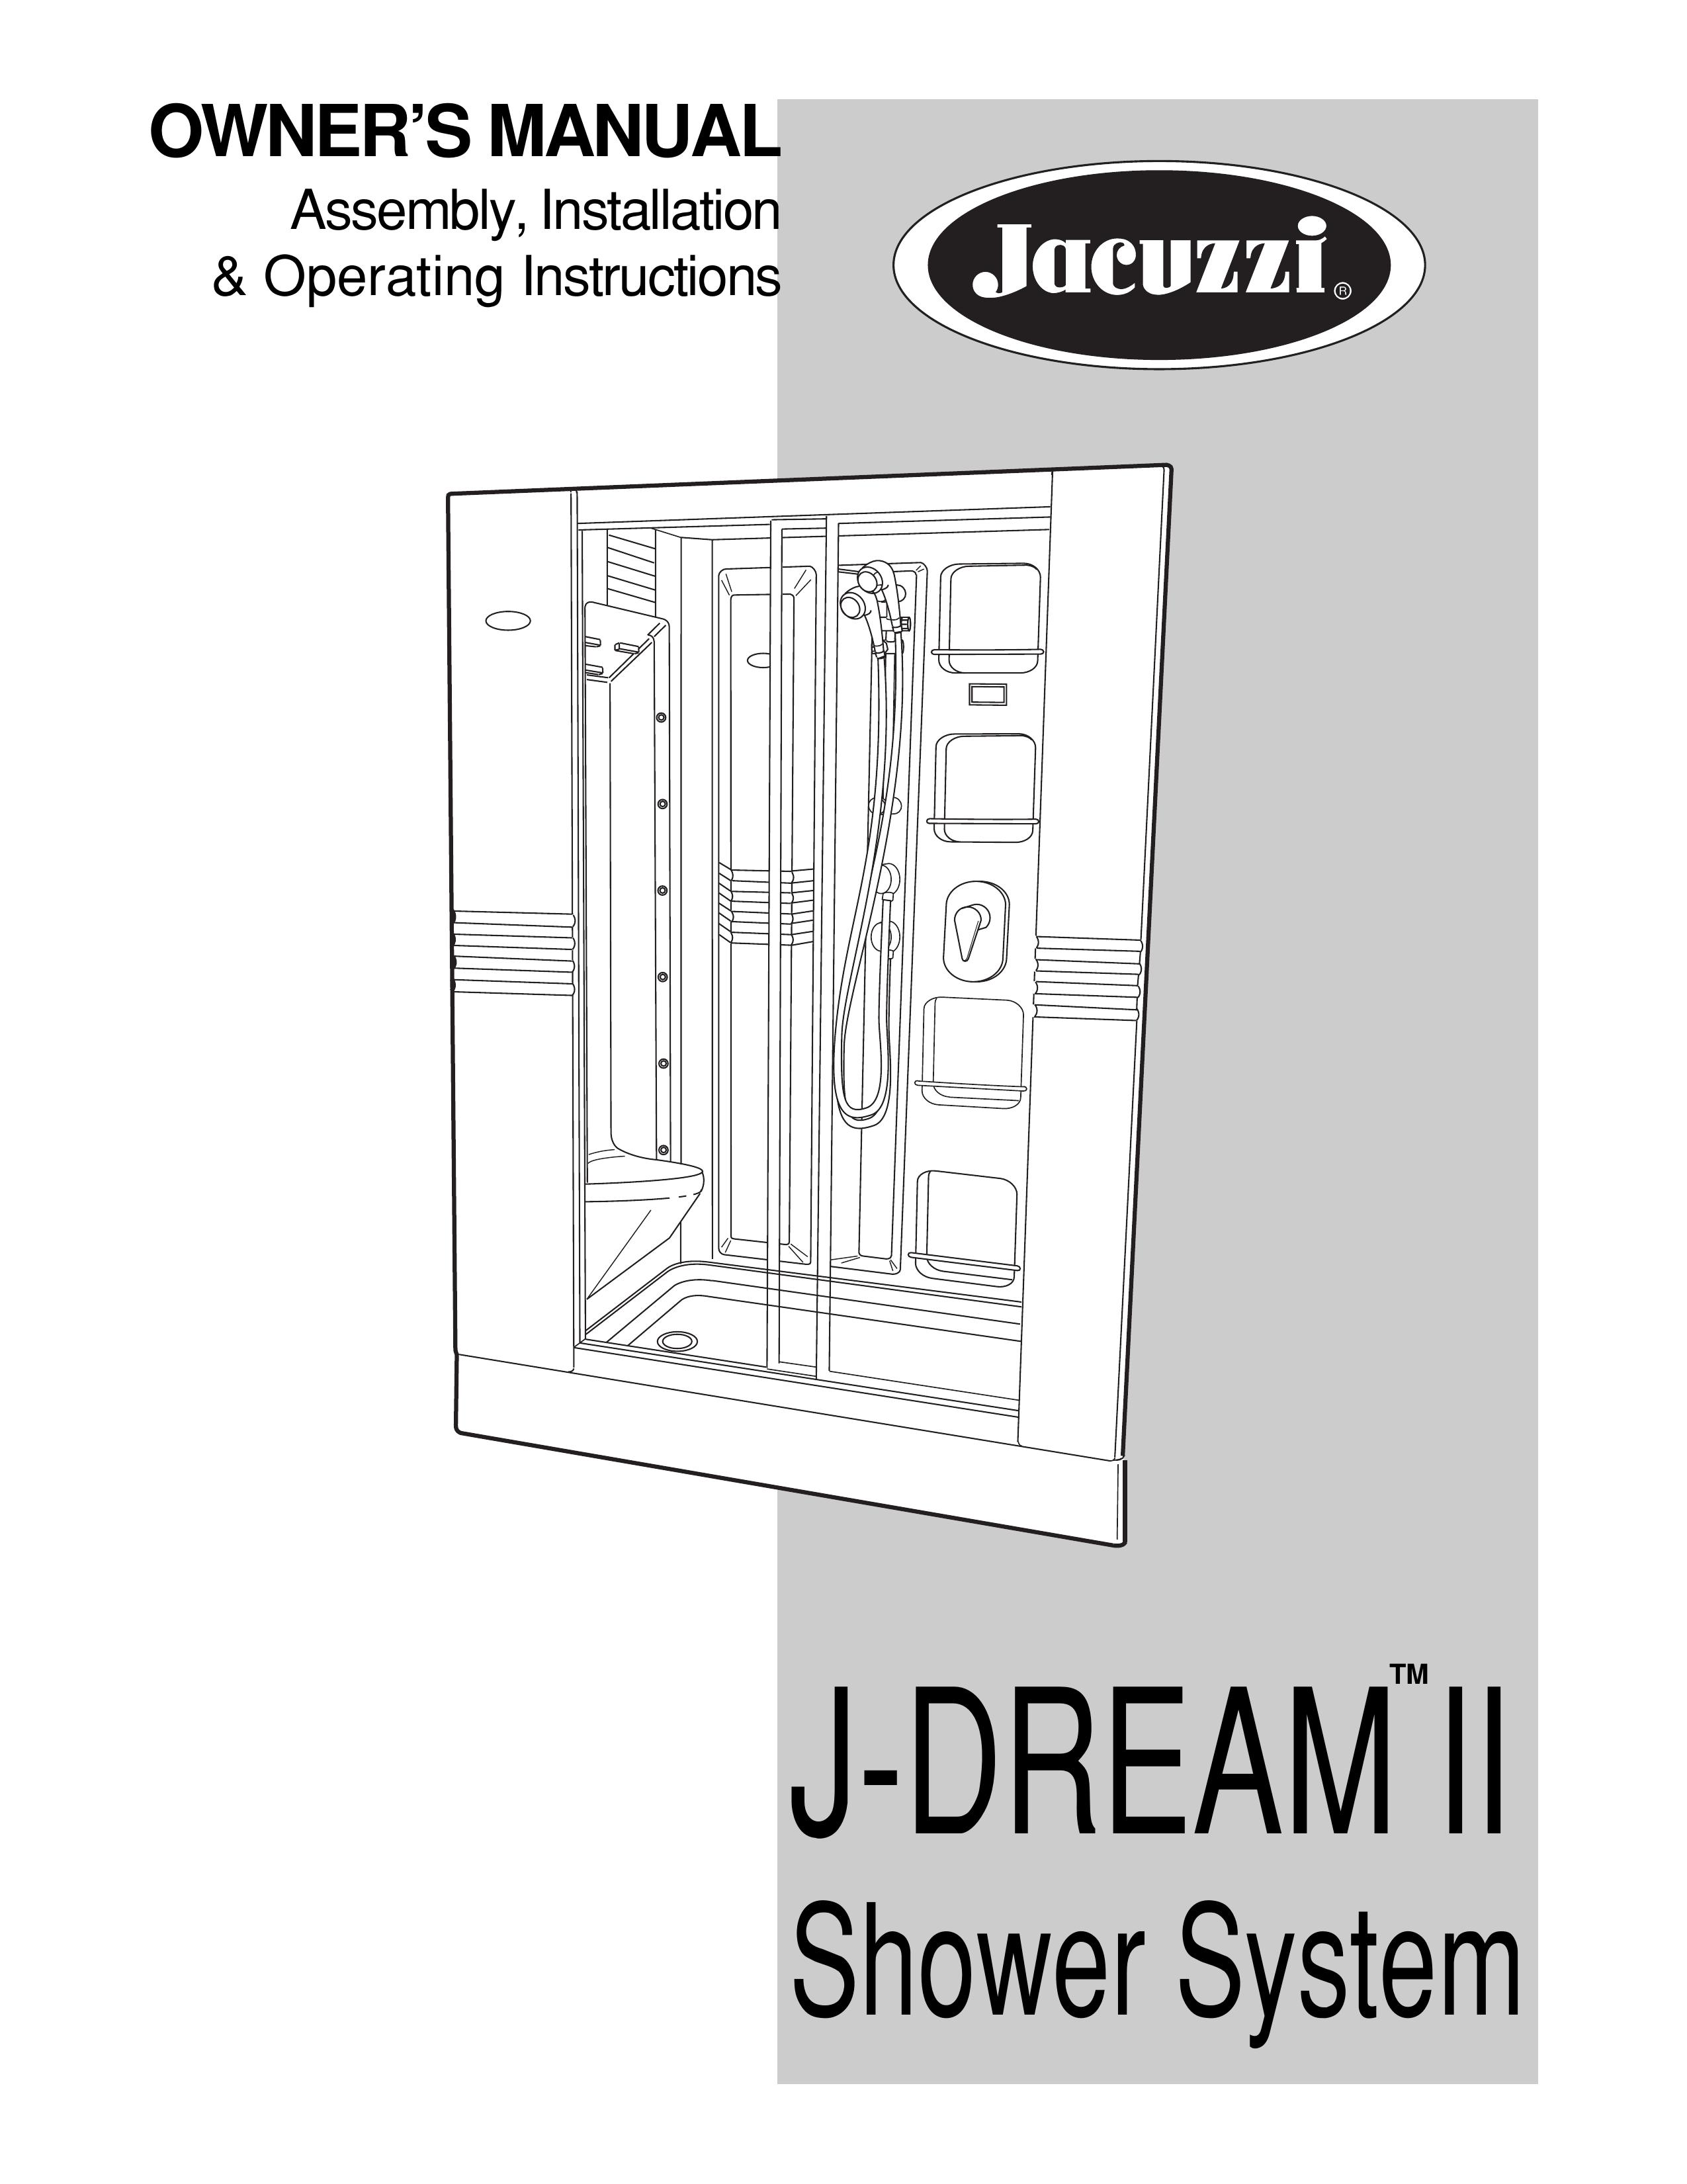 Jacuzzi J-DREAM II Outdoor Shower User Manual